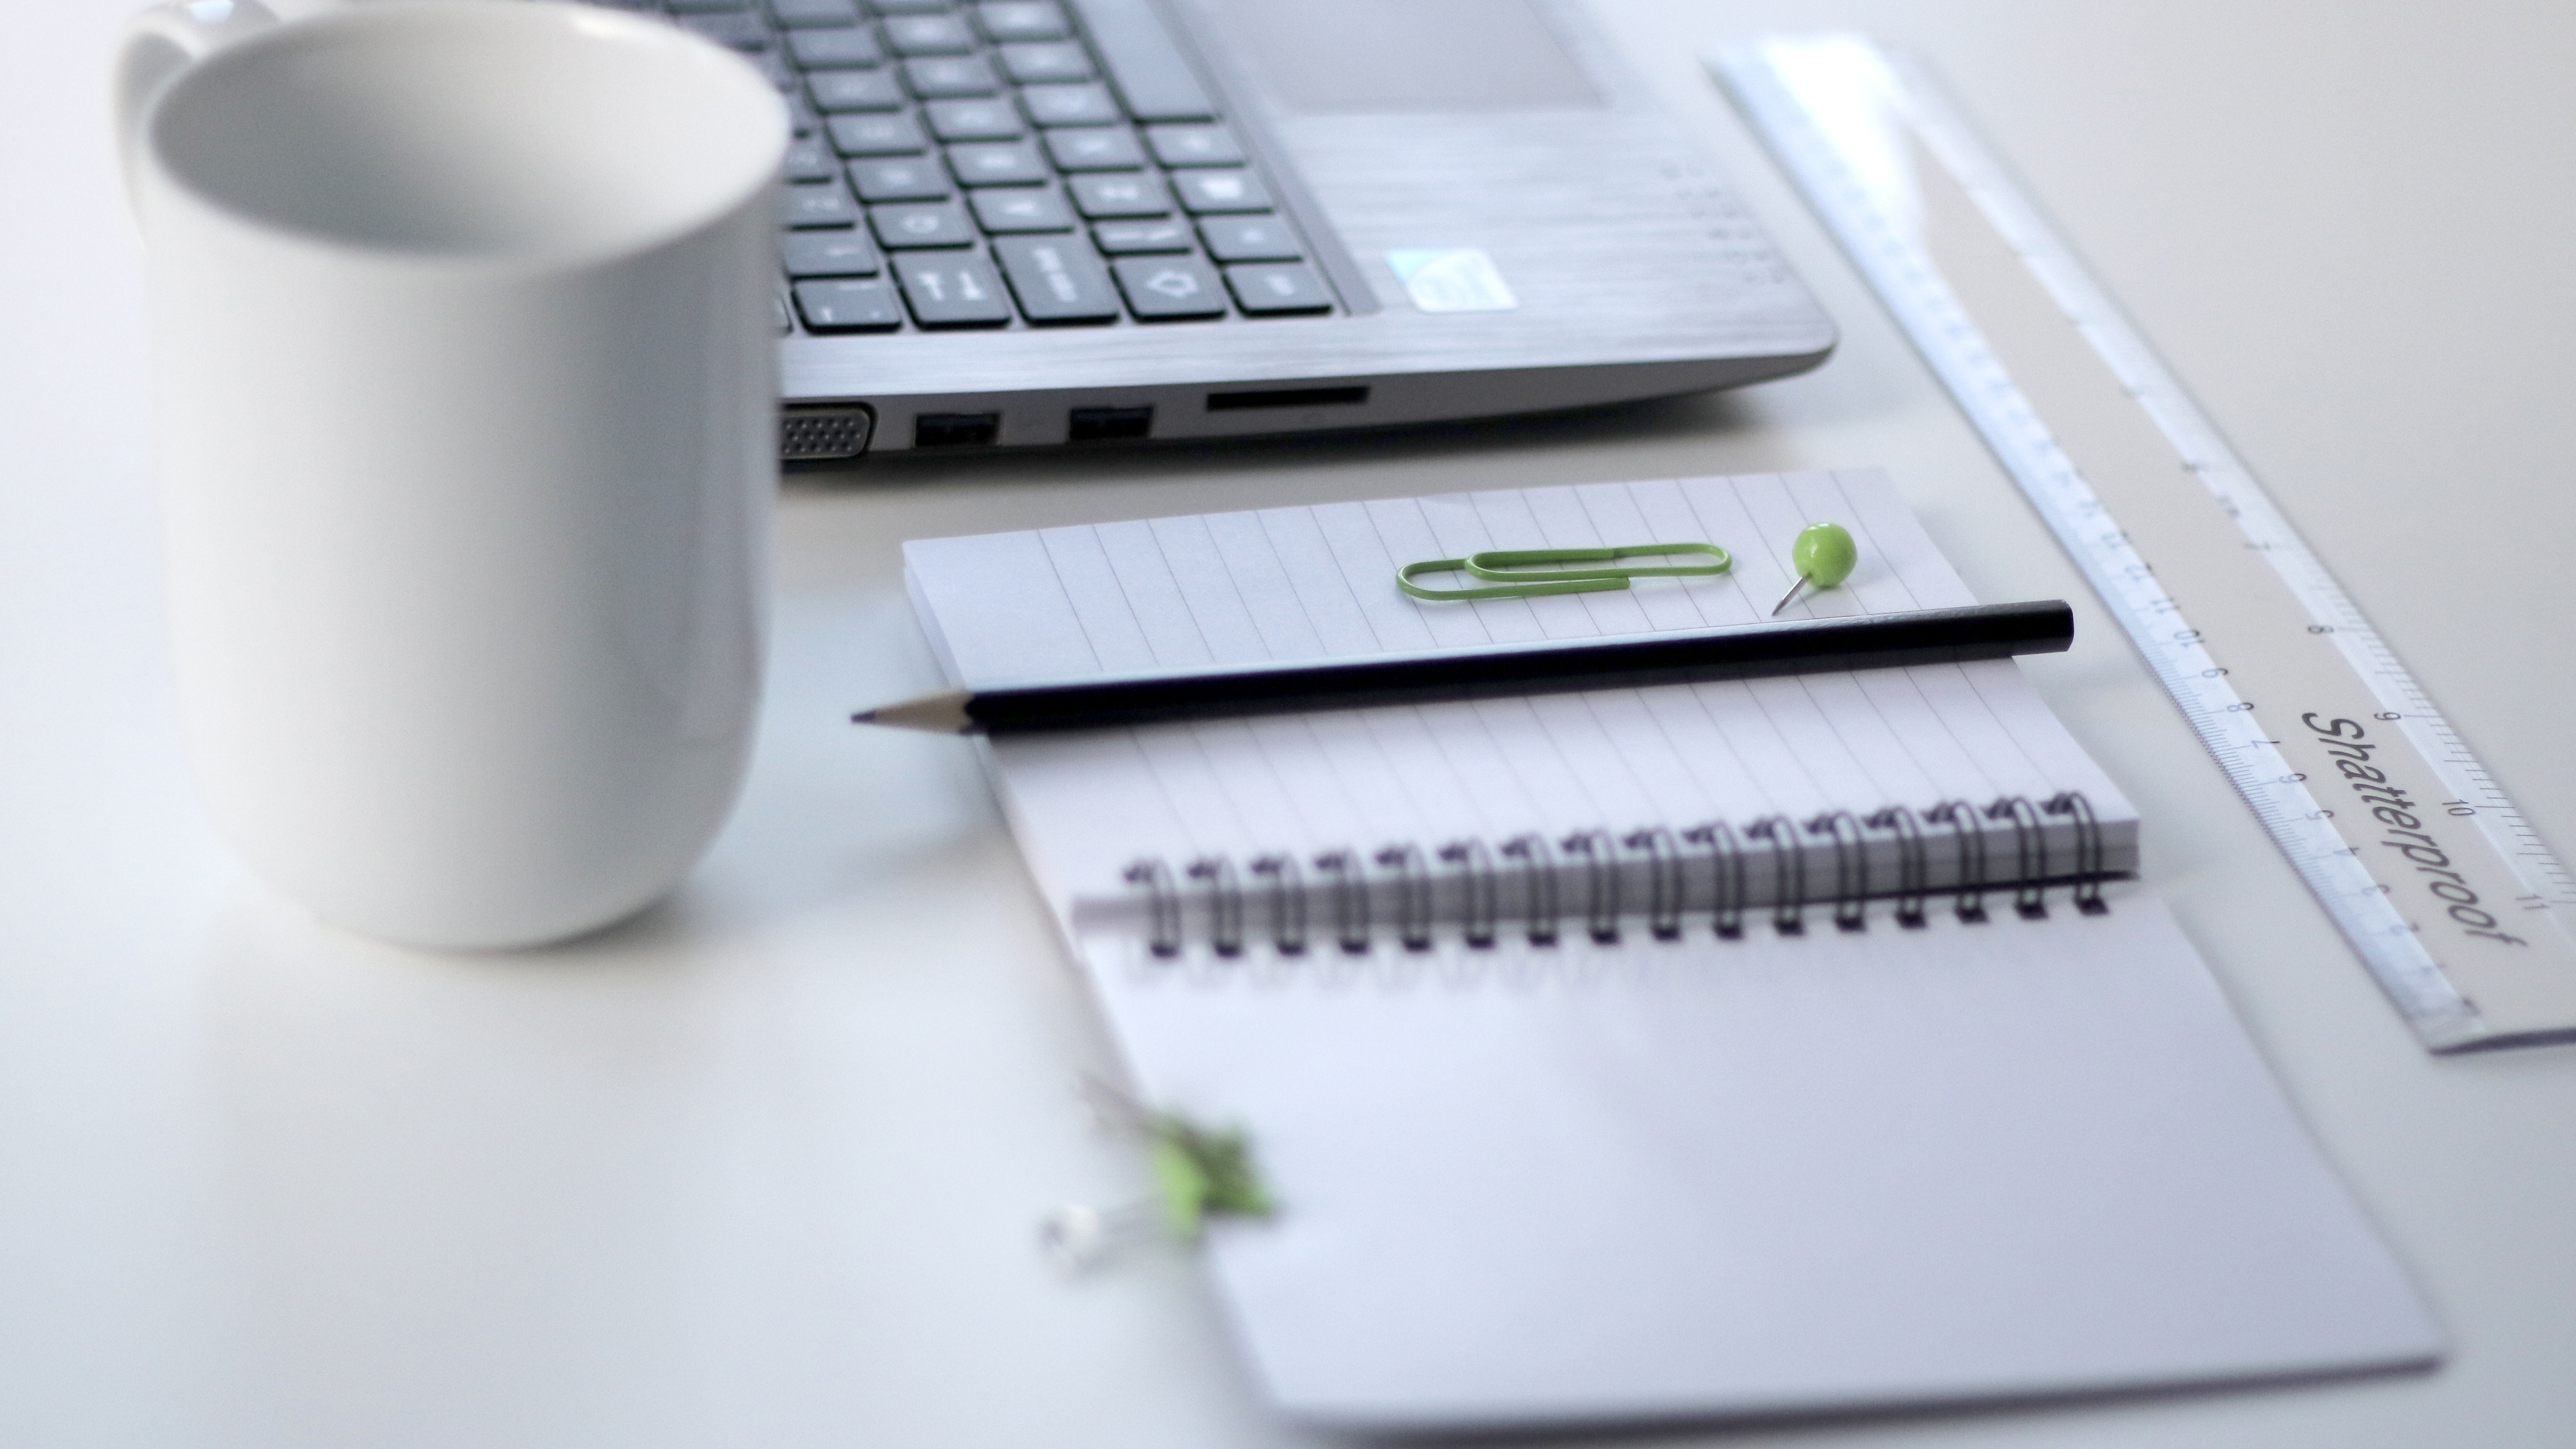 A mug, a laptop and some stationary on a desk